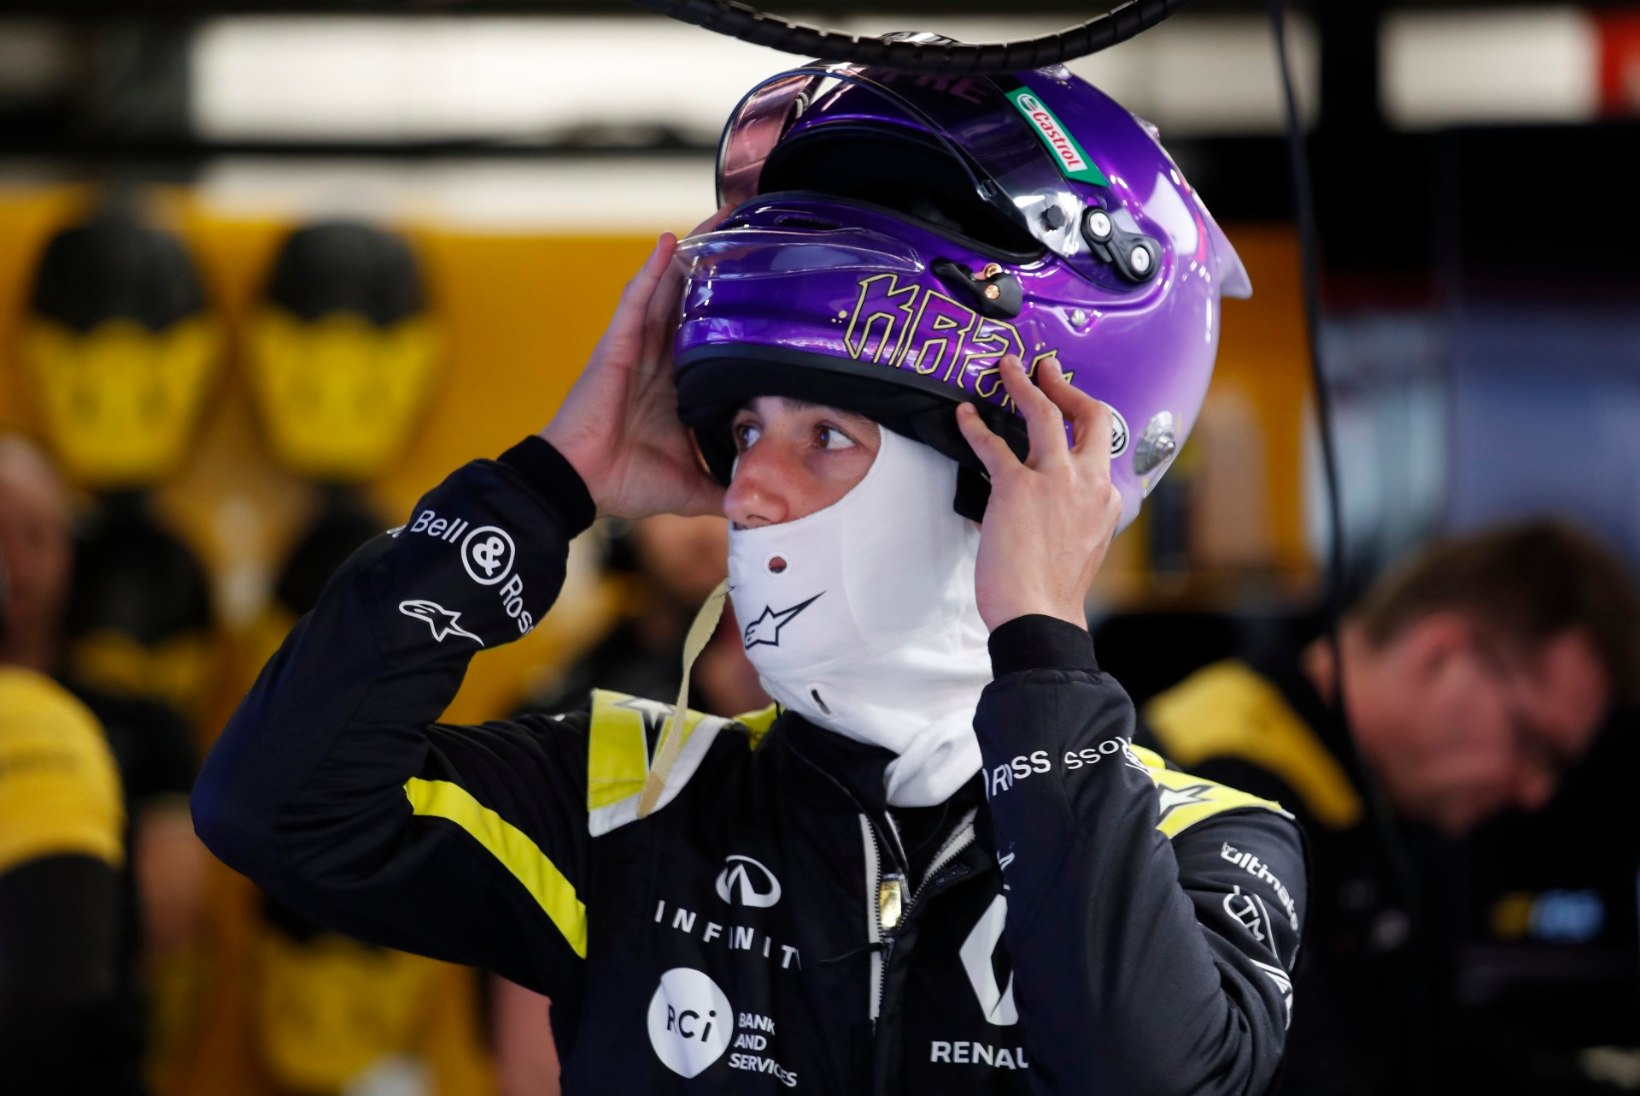 FOTOD | Ricciardo pühendas kiivridisaini hukkunud Kobe Bryantile